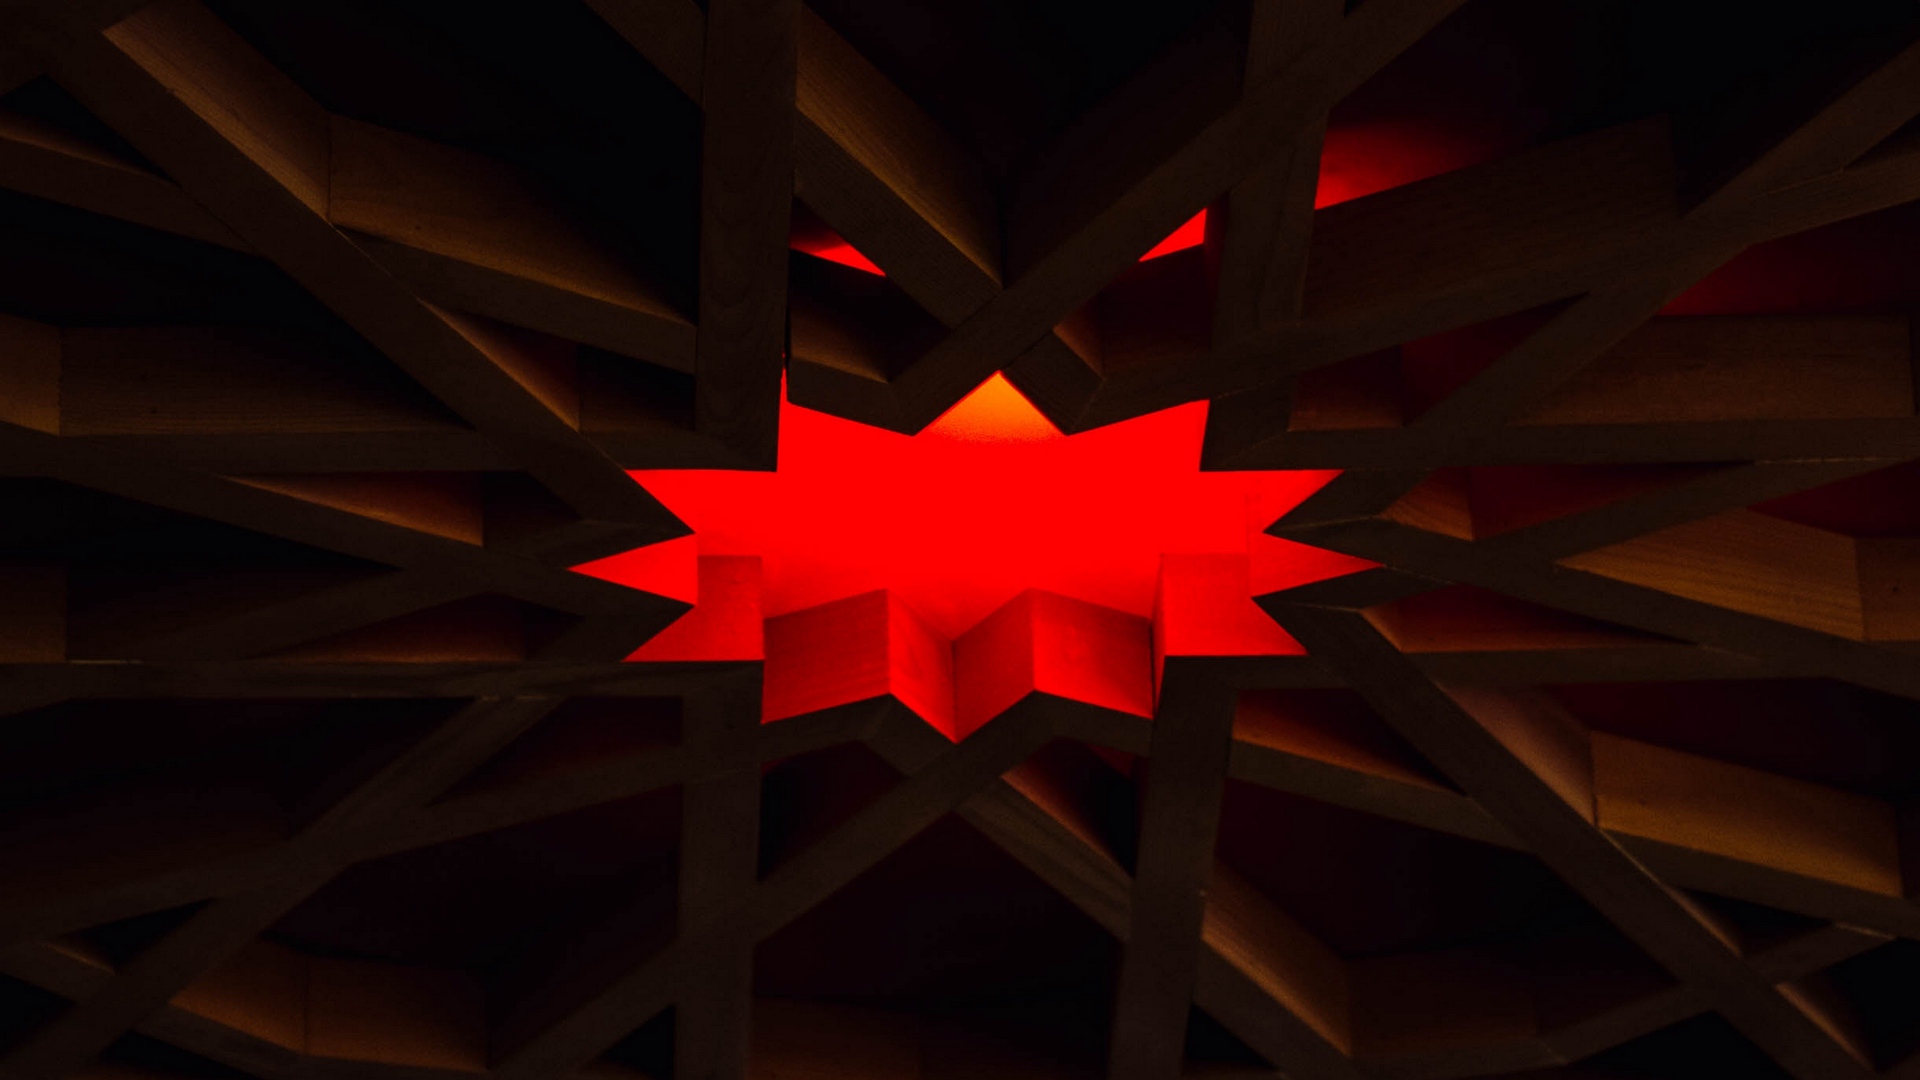 Wallpaper Polygon, Design, Red, Dark - Black Red Polygon Texture 1080p - HD Wallpaper 